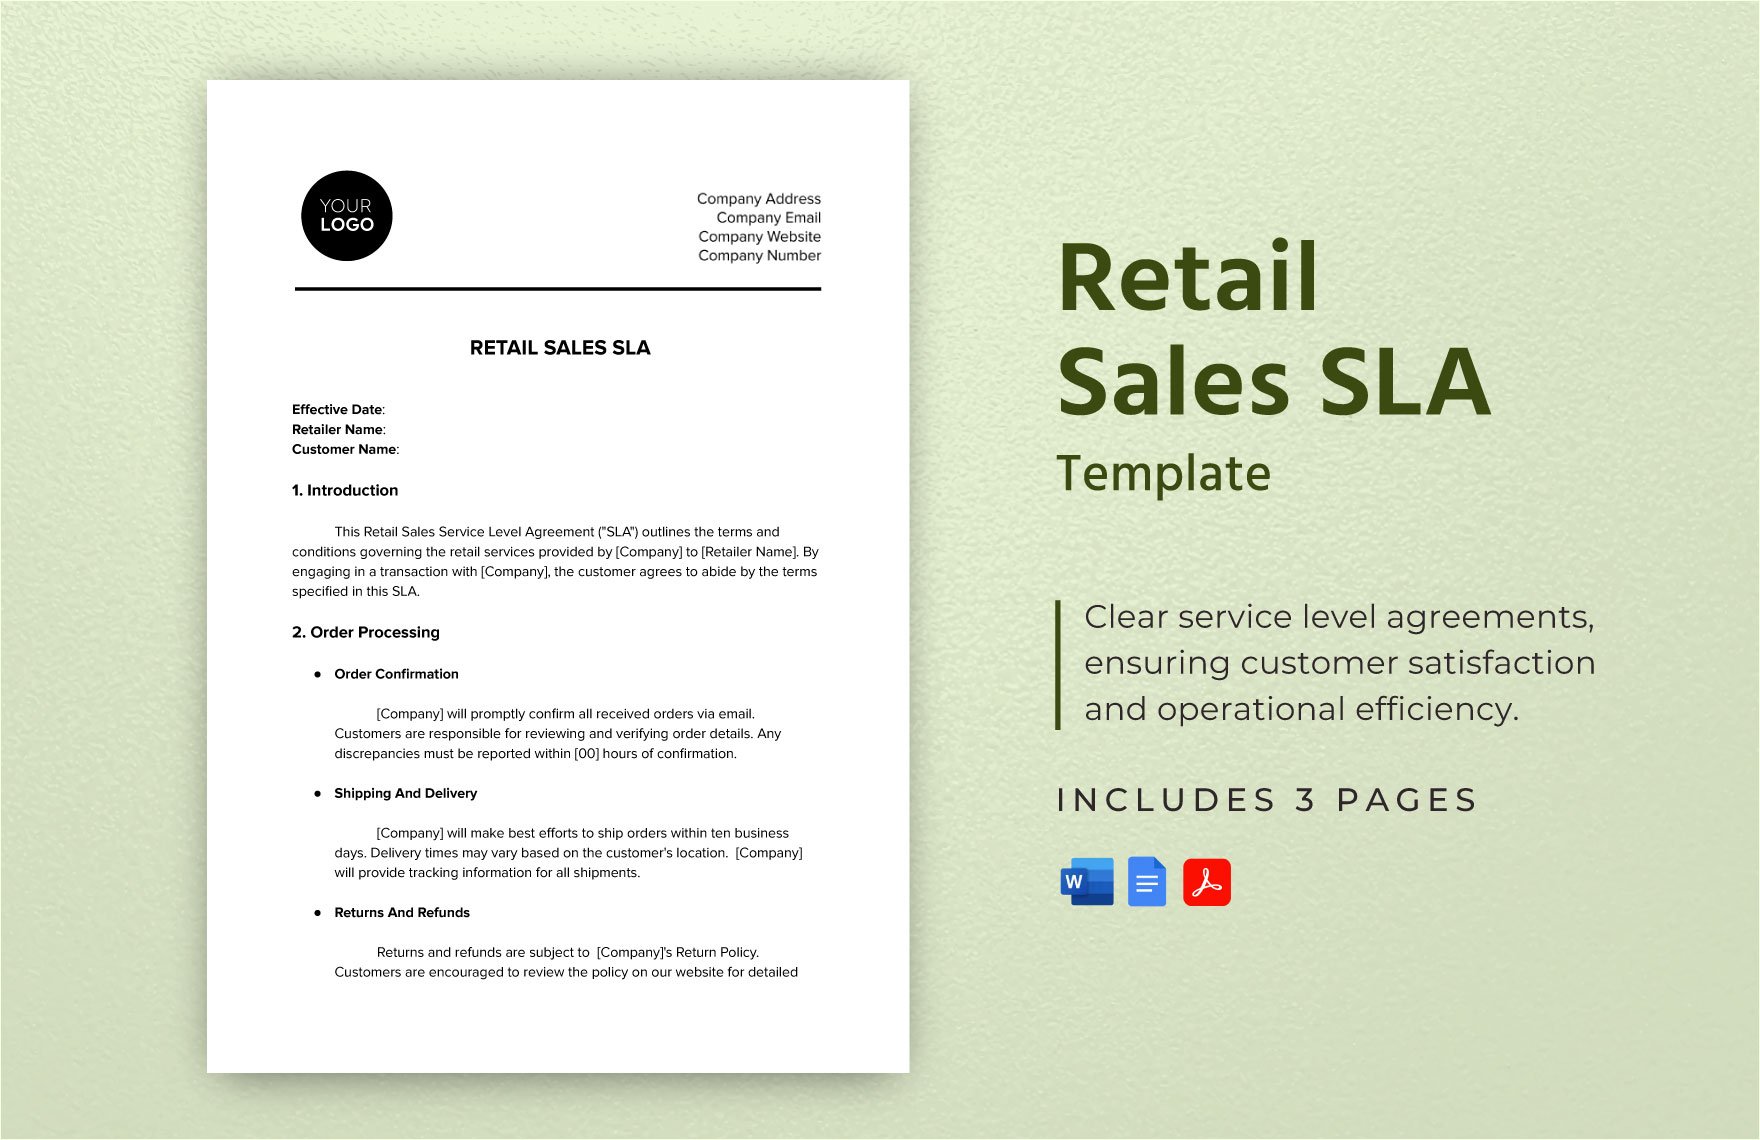 Retail Sales SLA Template